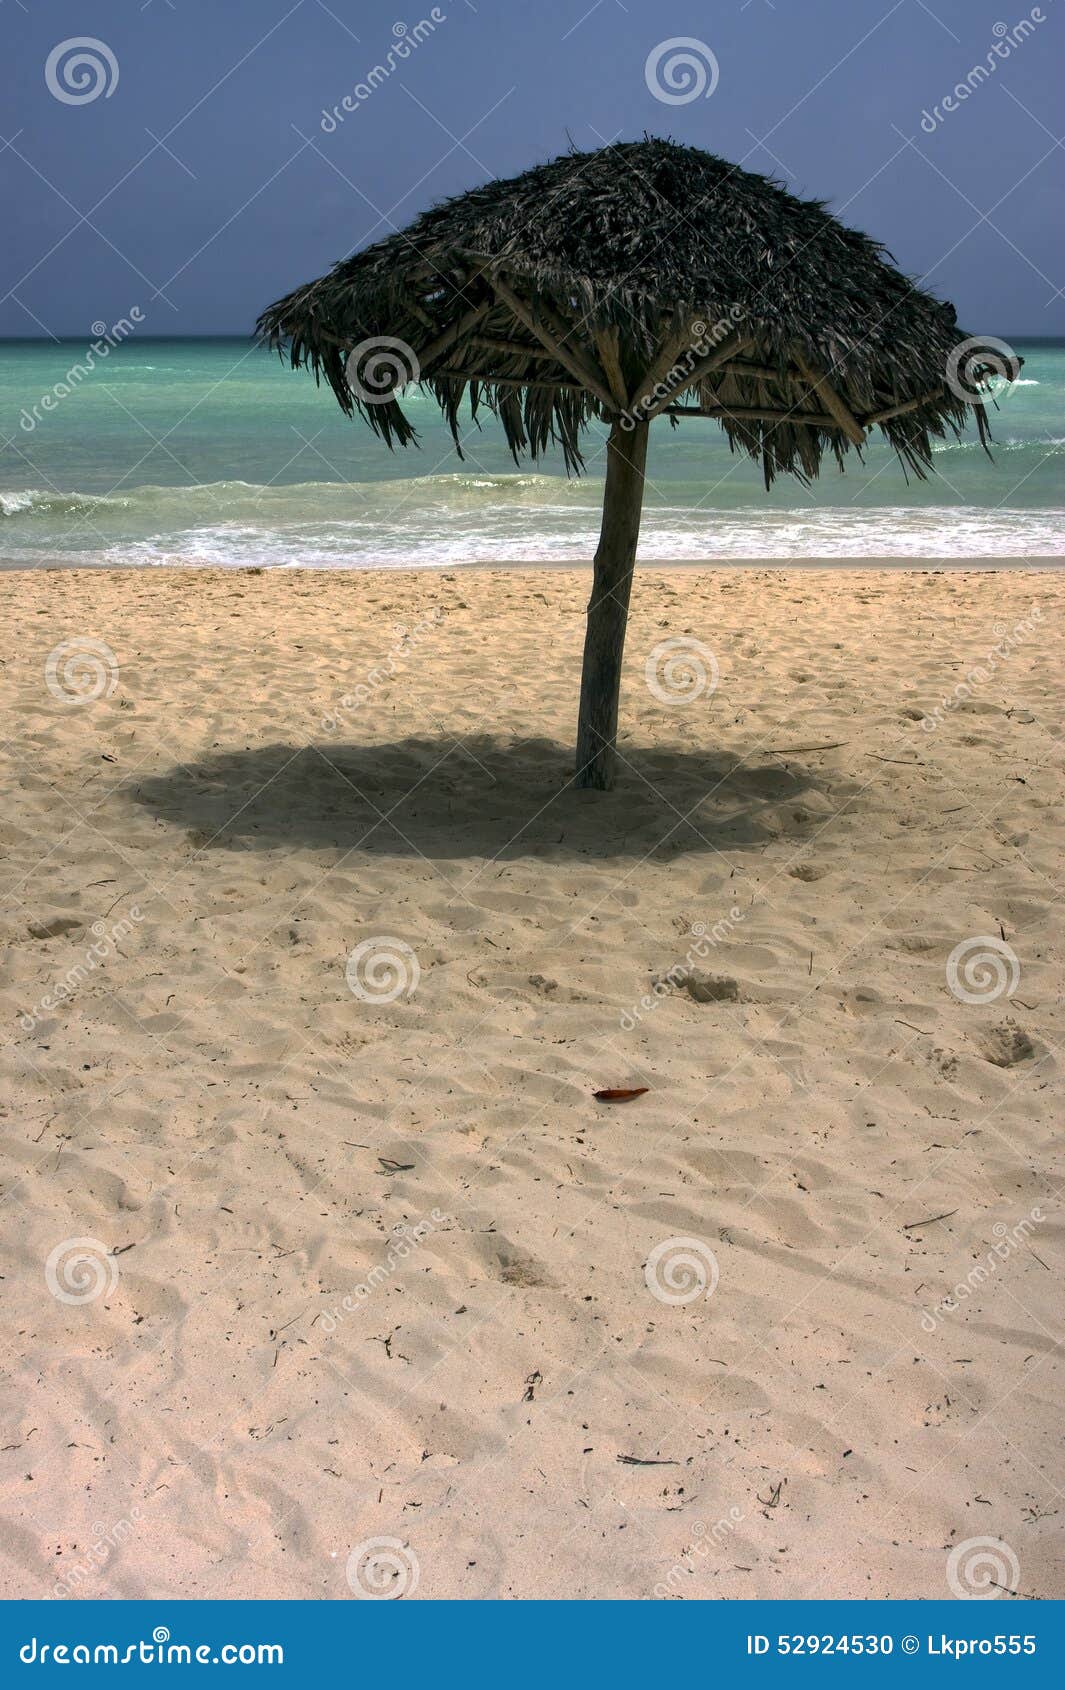 republica dominicana coastline